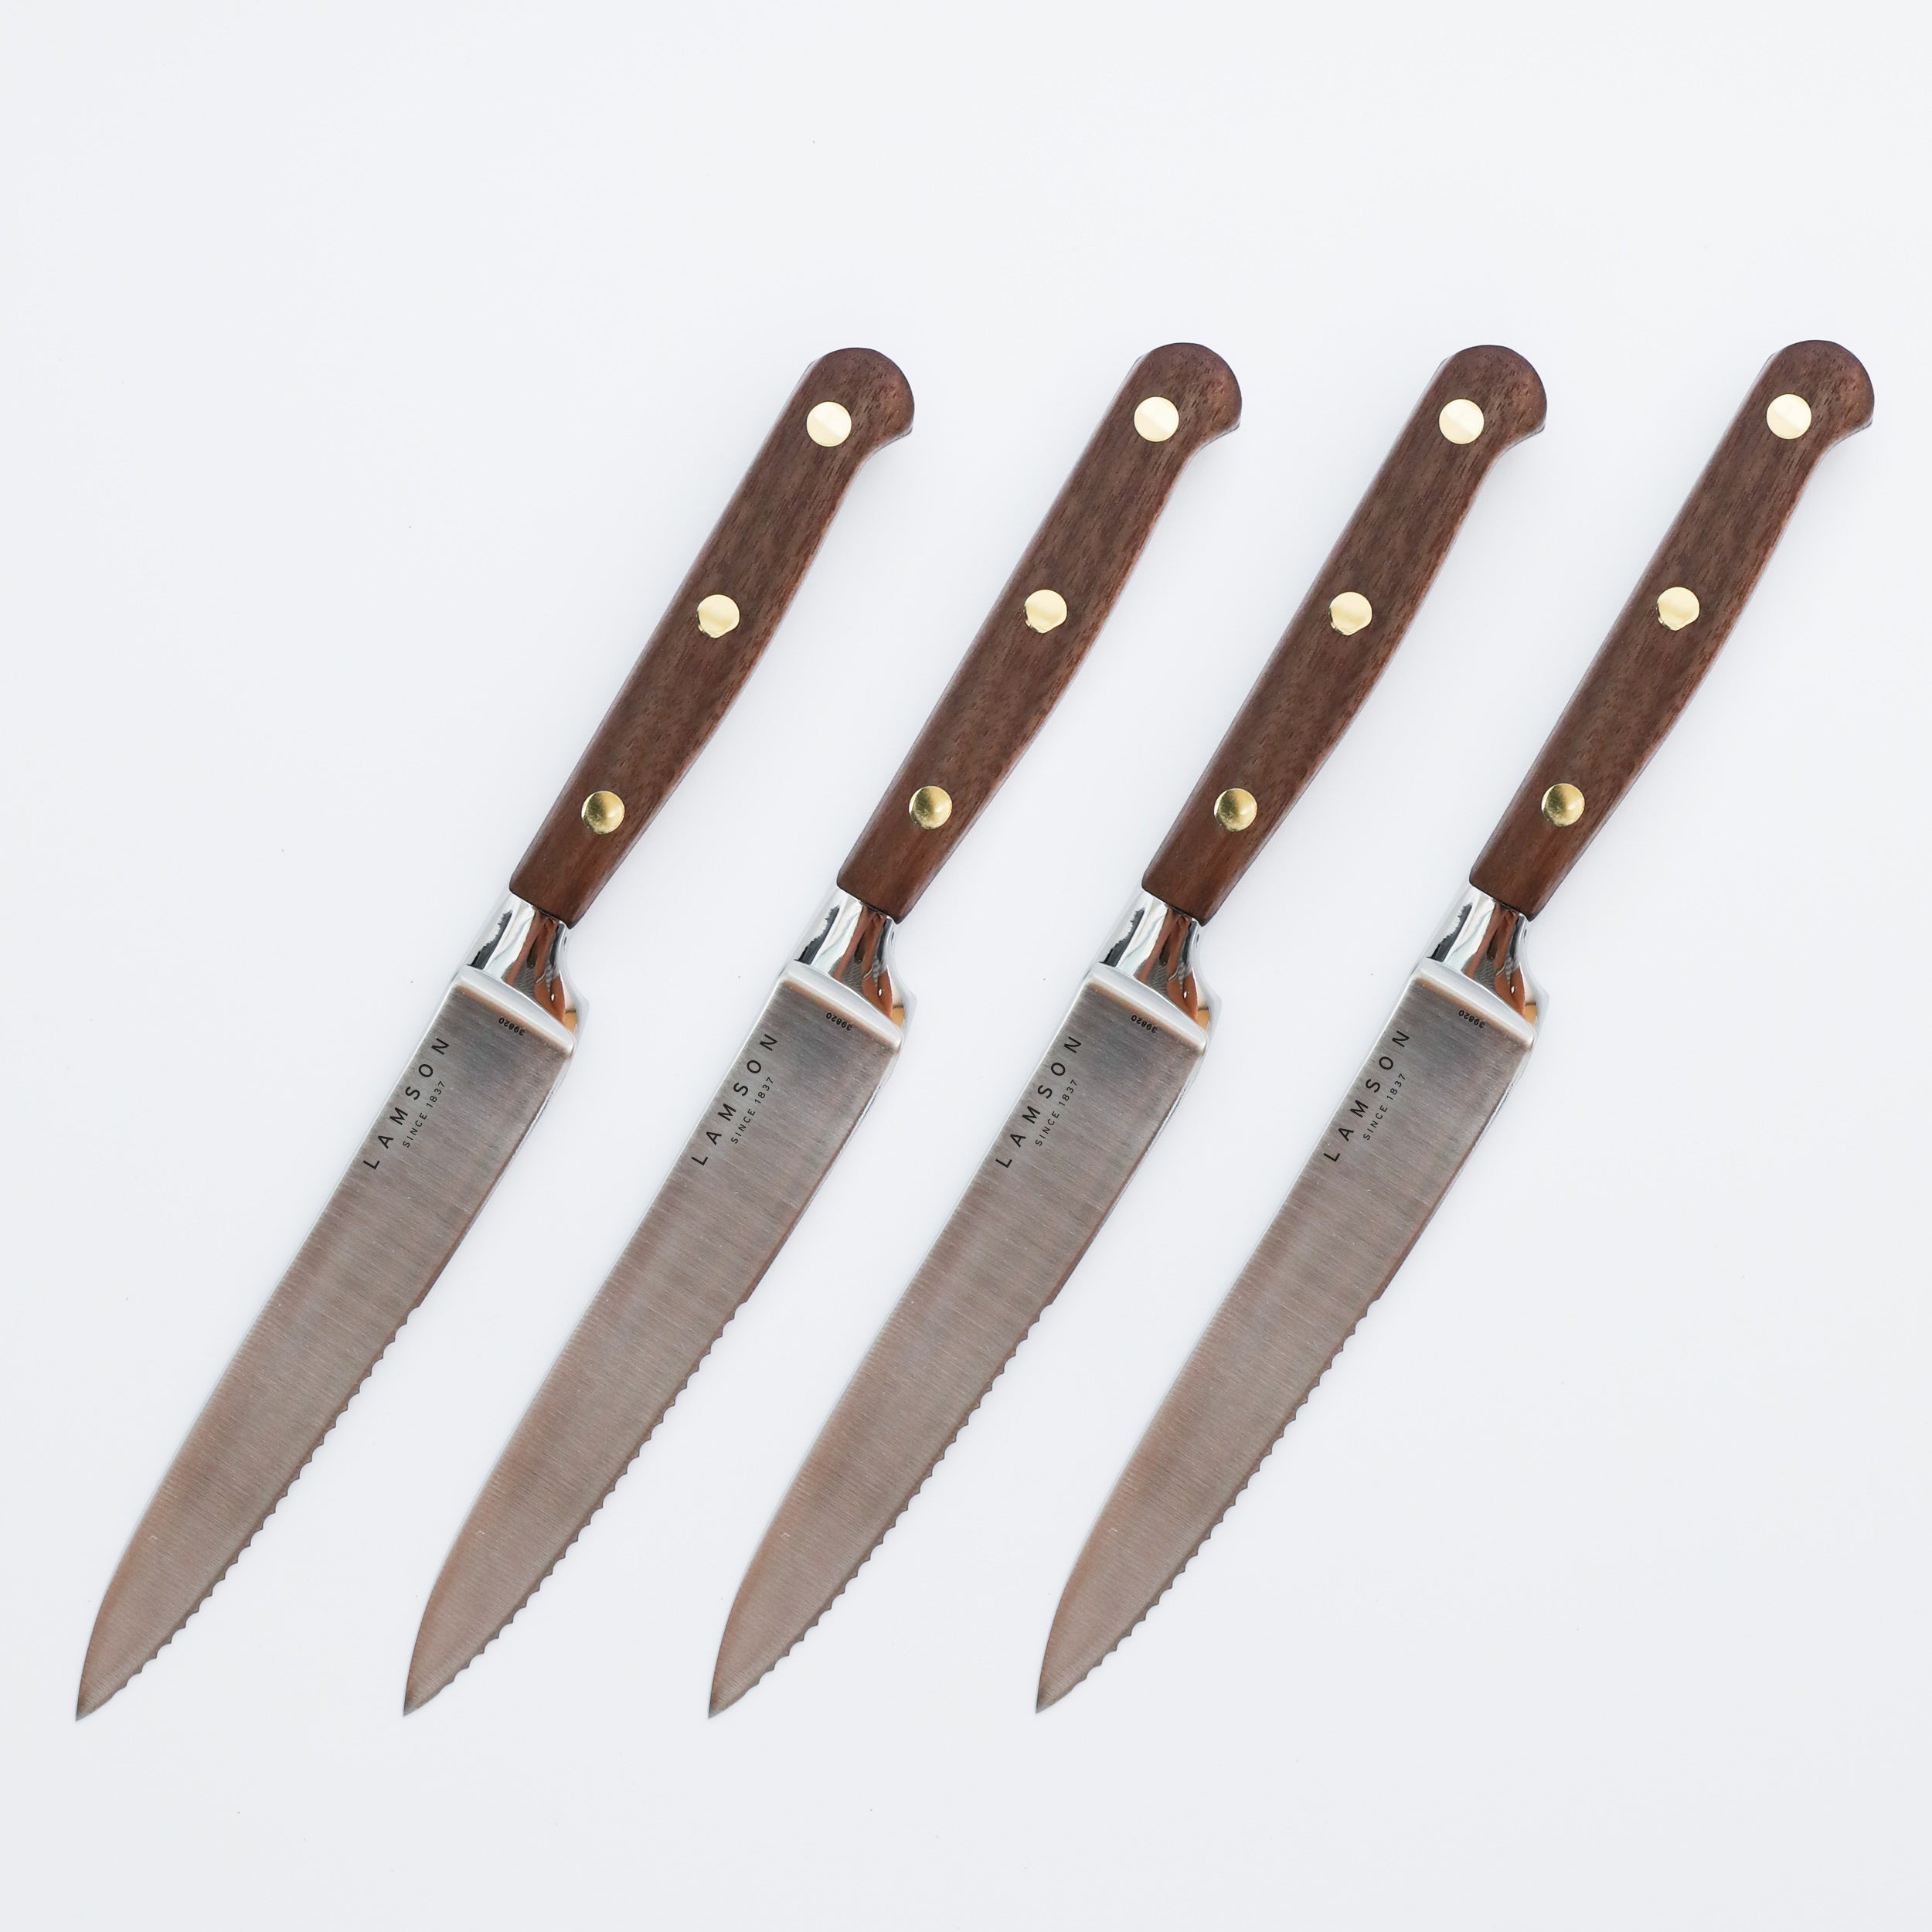 5" Premier Forged Fine-Edge (or) Serrated Steak Knives